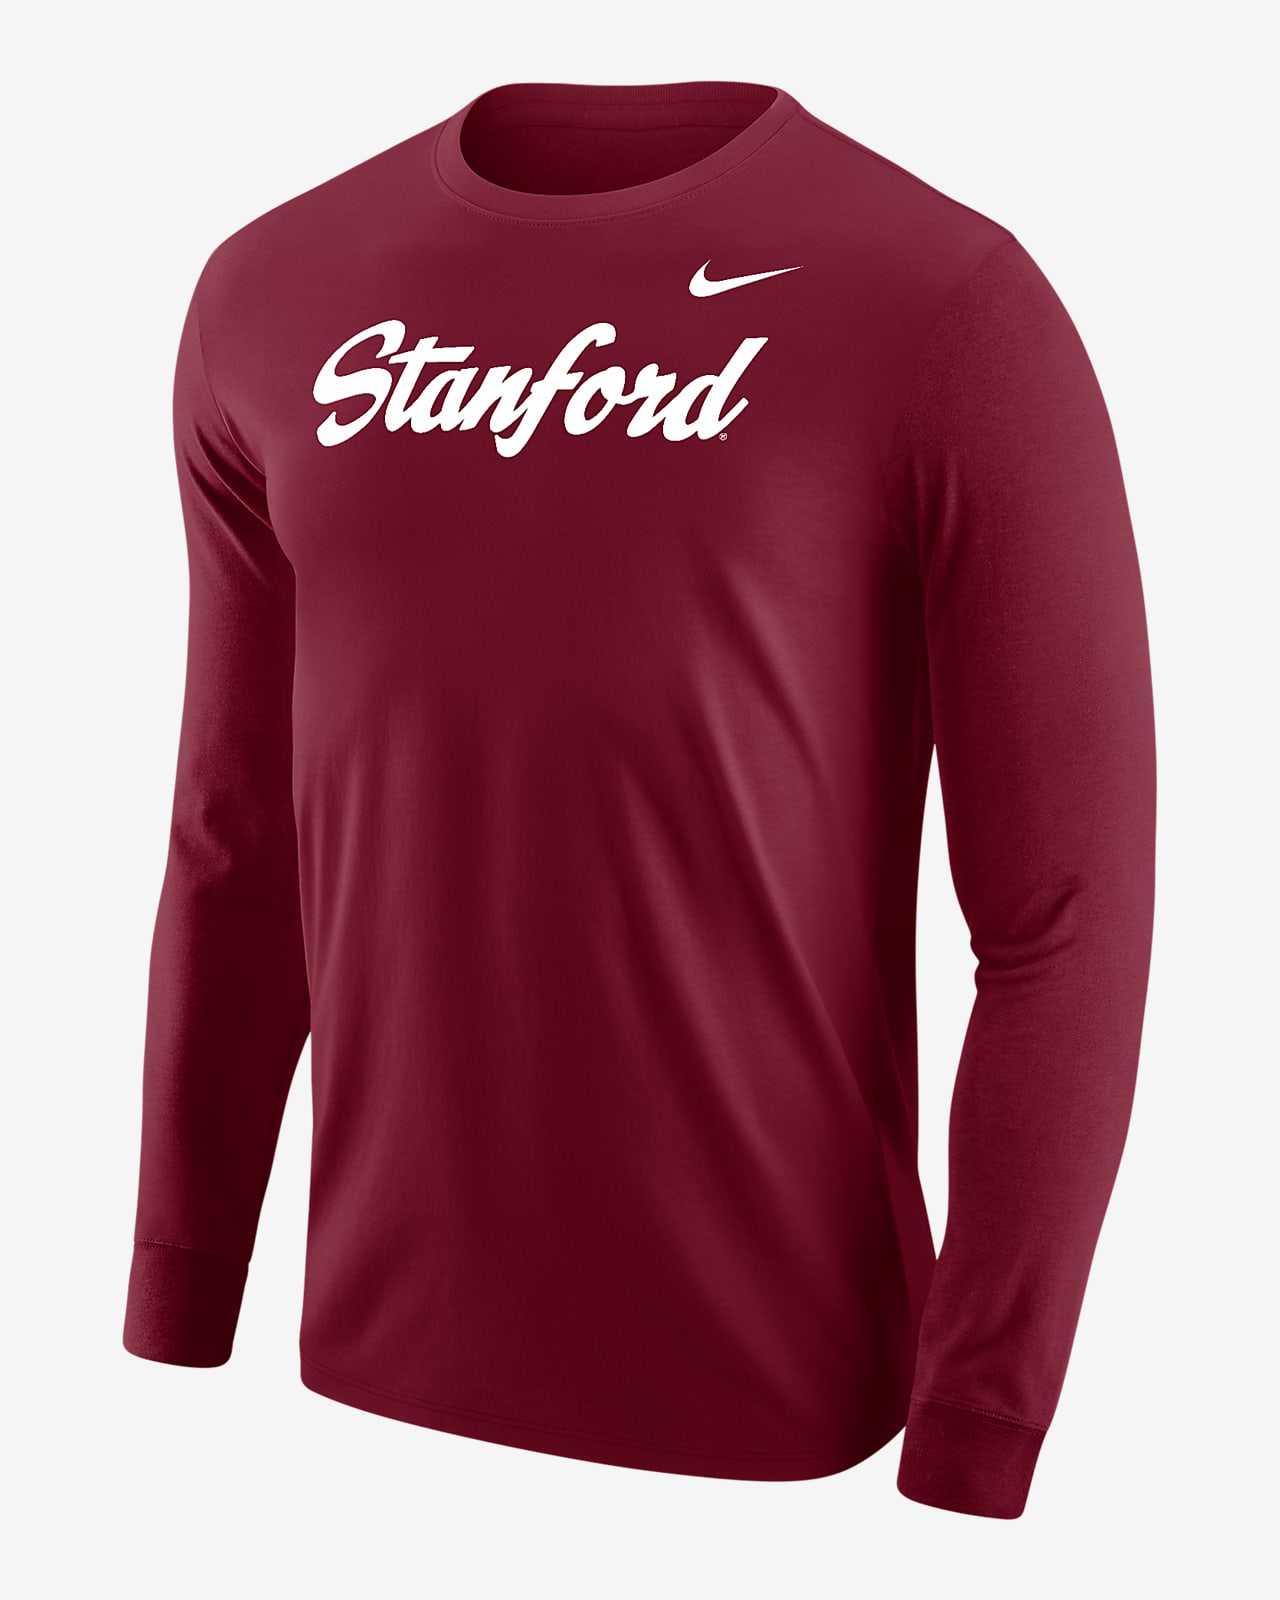 Playera de manga larga universitaria Nike para hombre Stanford